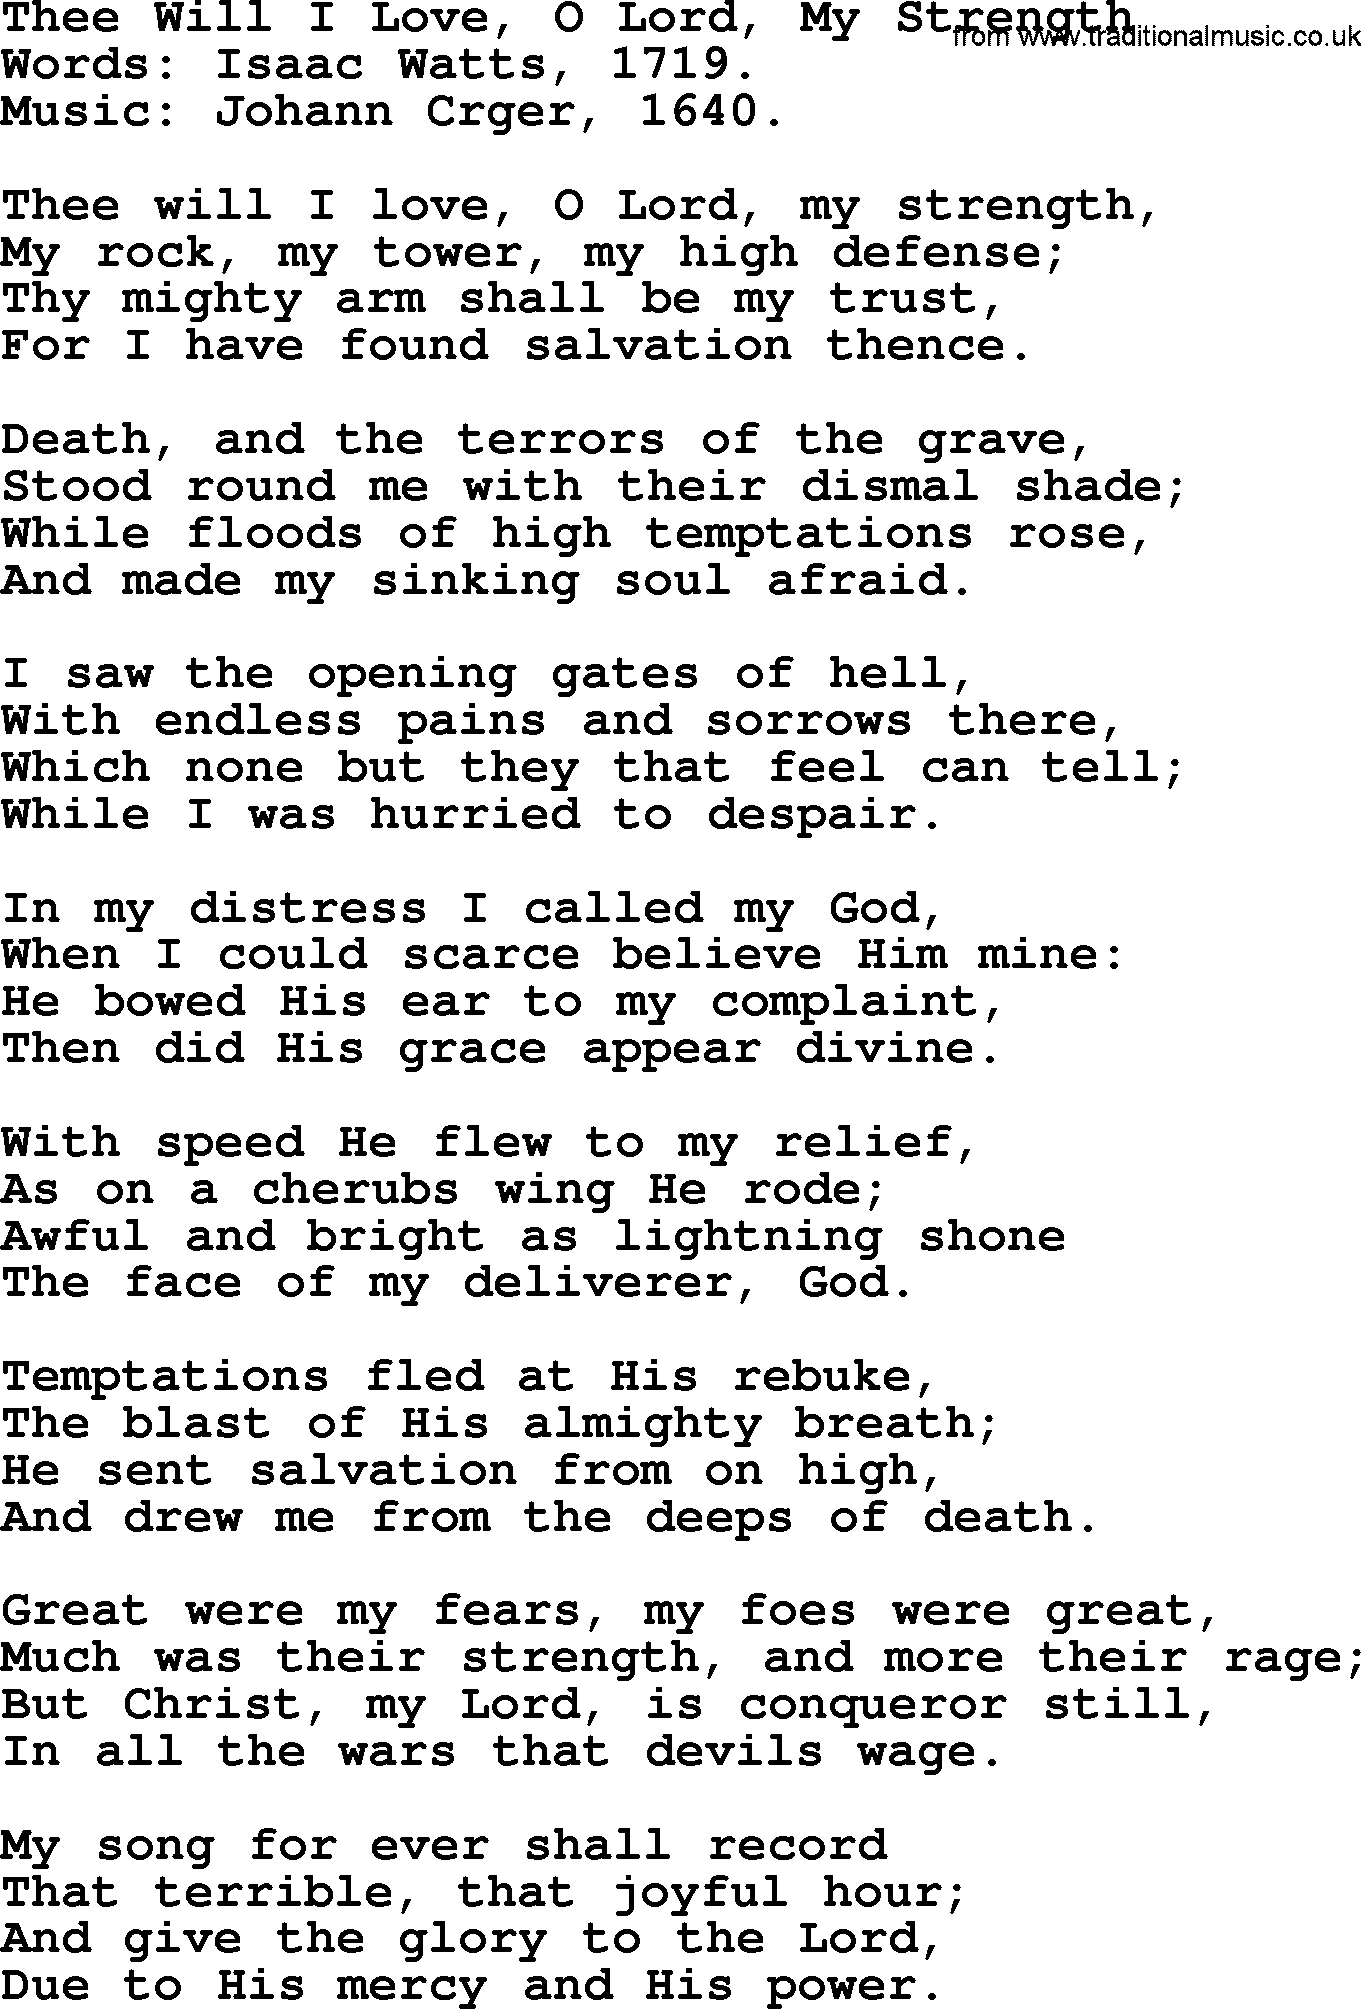 Isaac Watts Christian hymn: Thee Will I Love, O Lord, My Strength- lyricss